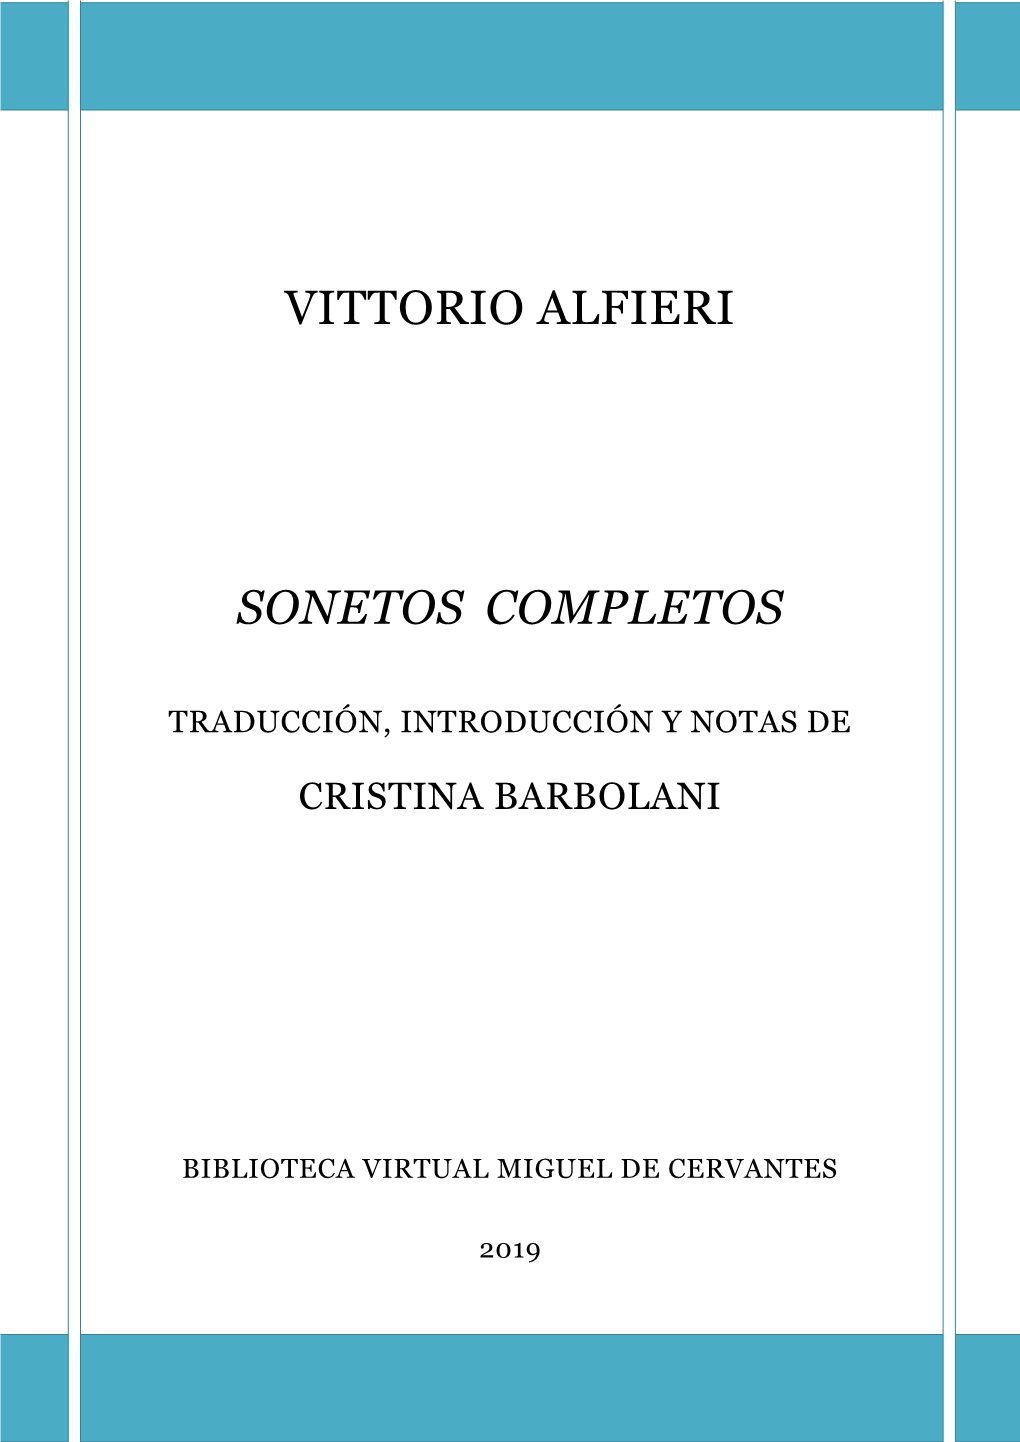 Vittorio Alfieri Sonetos Completos